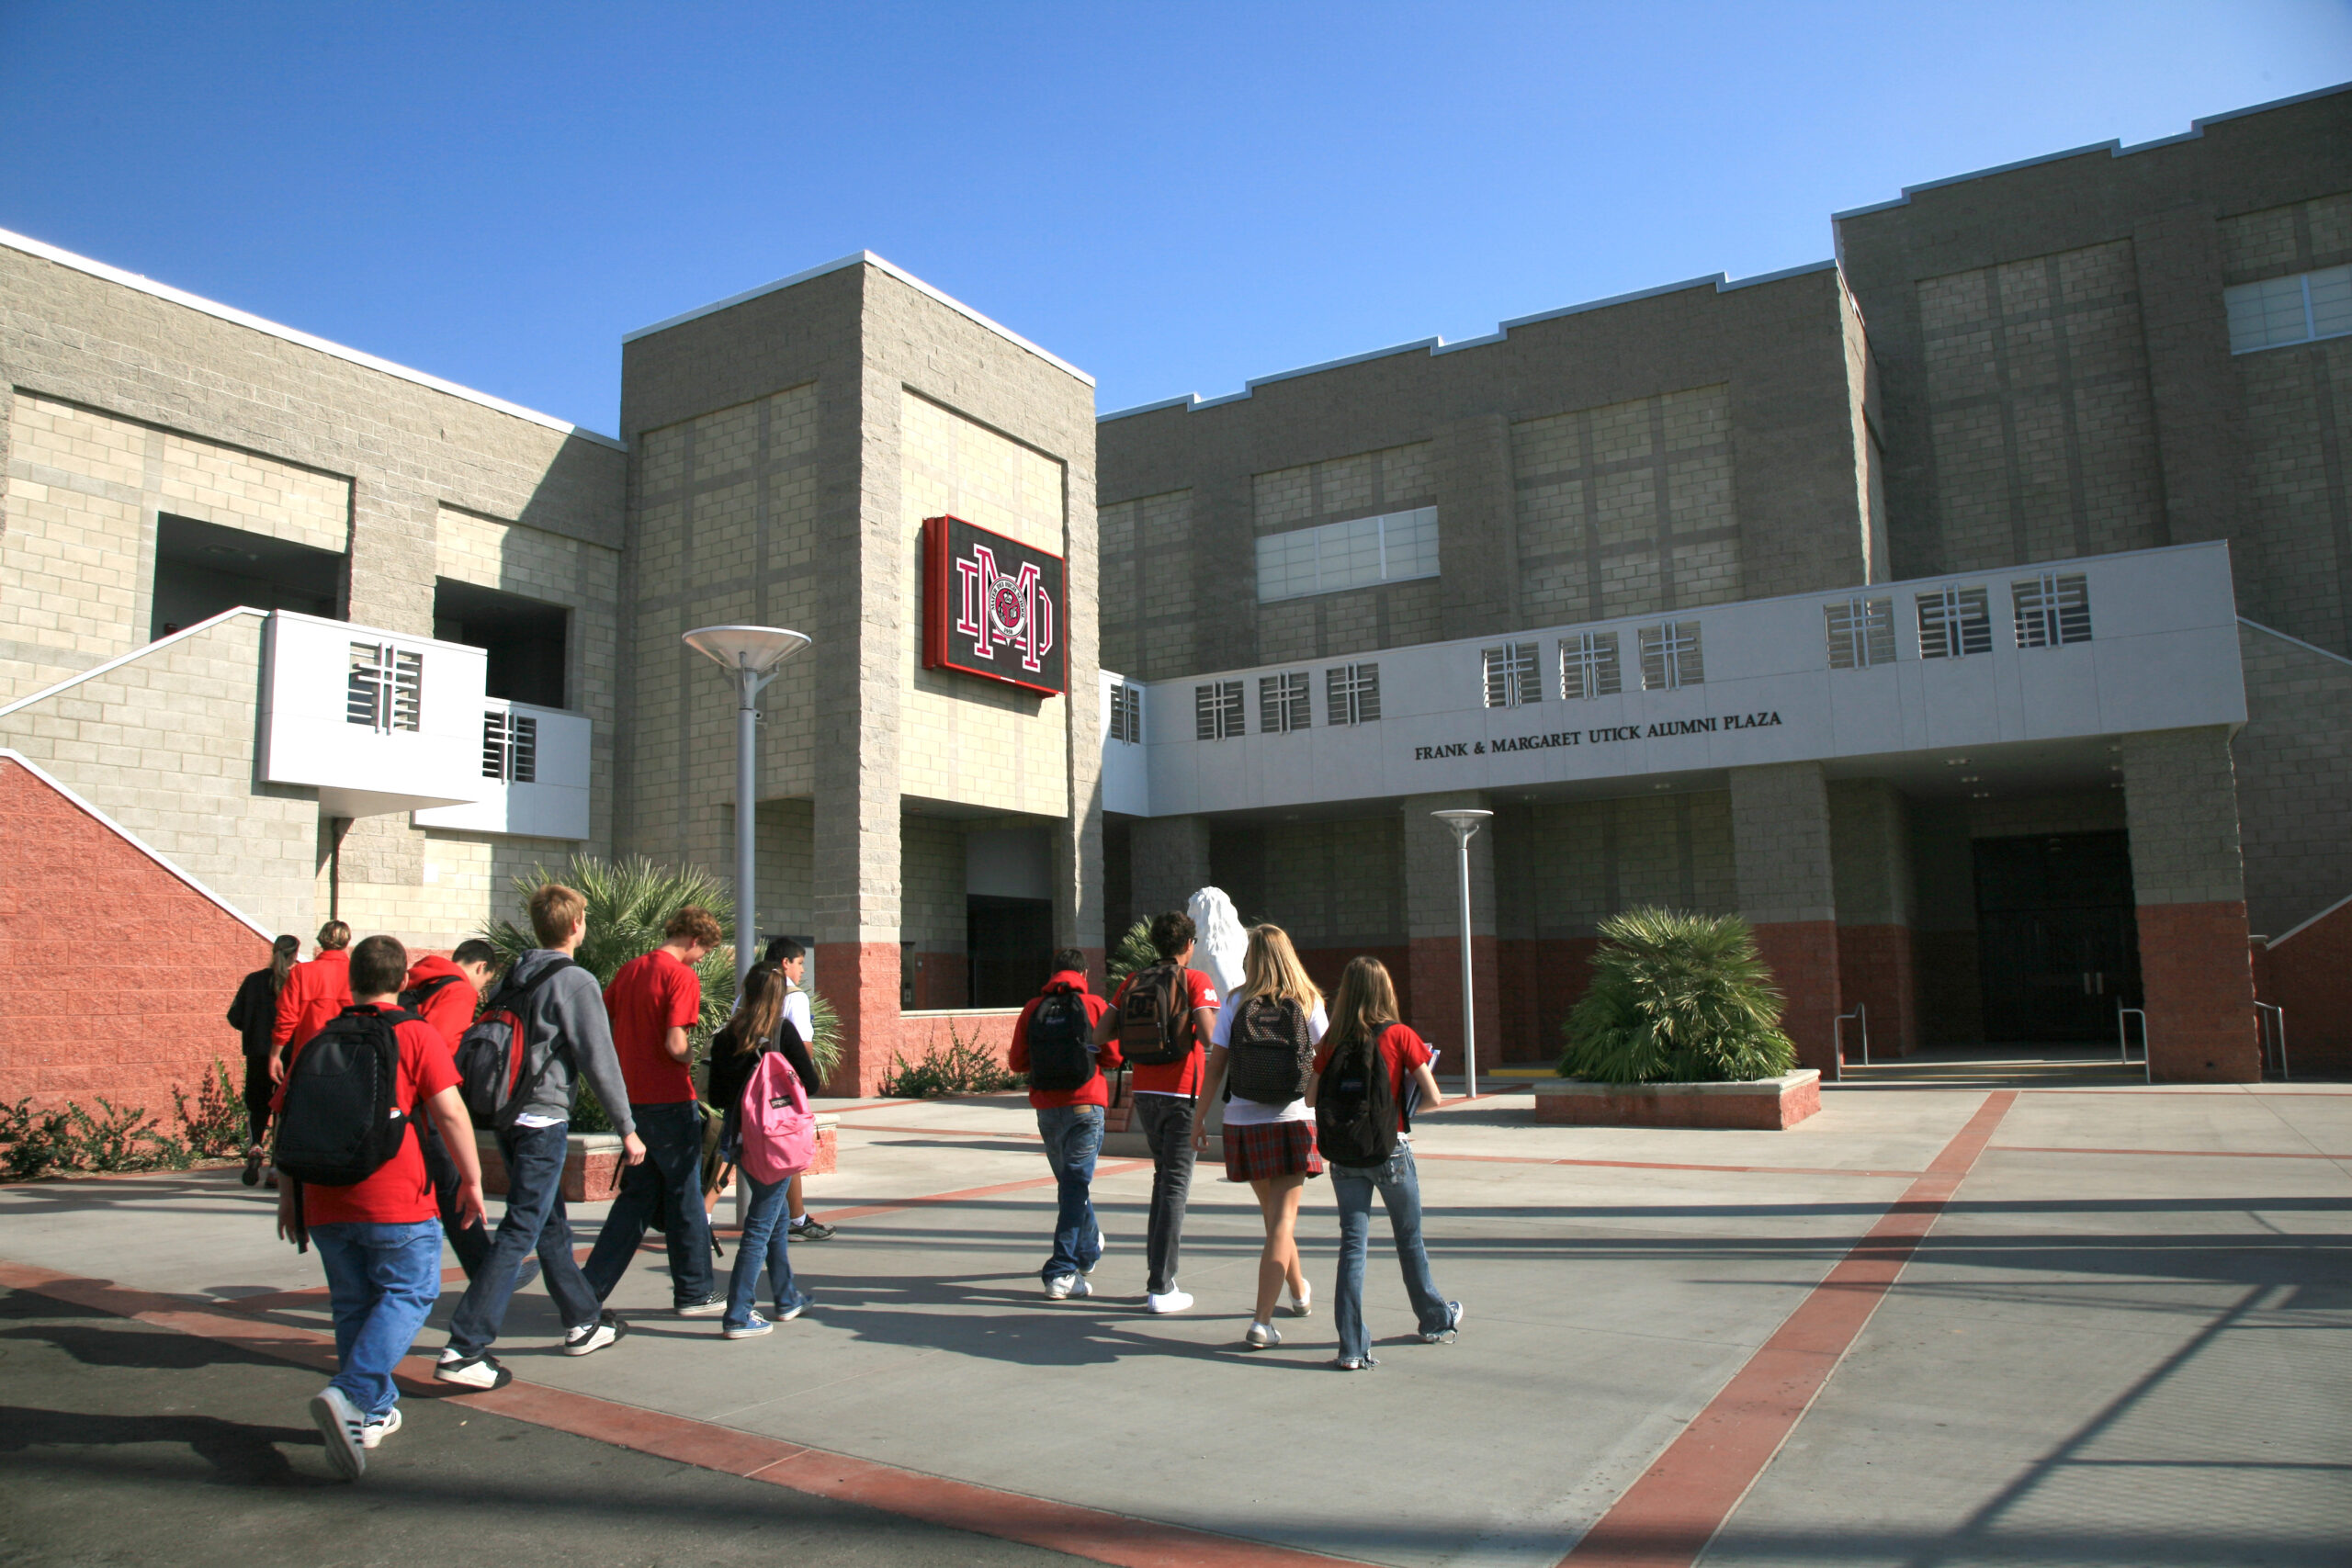 Students walking across a courtyard into school building